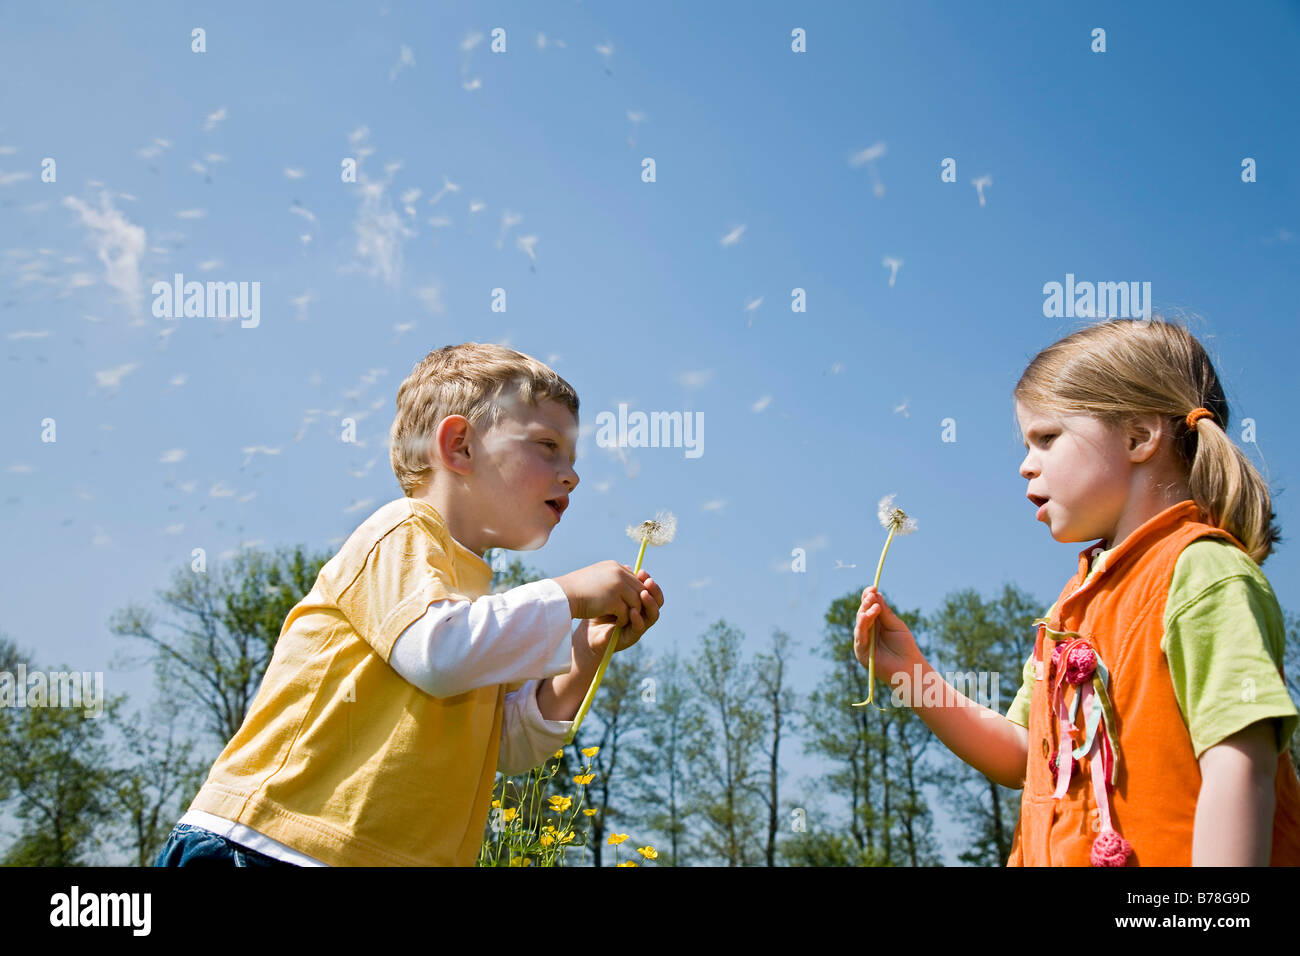 Boy, 3 years, and girl, 4 years, blowing blowballs, dandelion seeds (Taraxacum officinale), Switzerland, Europe Stock Photo